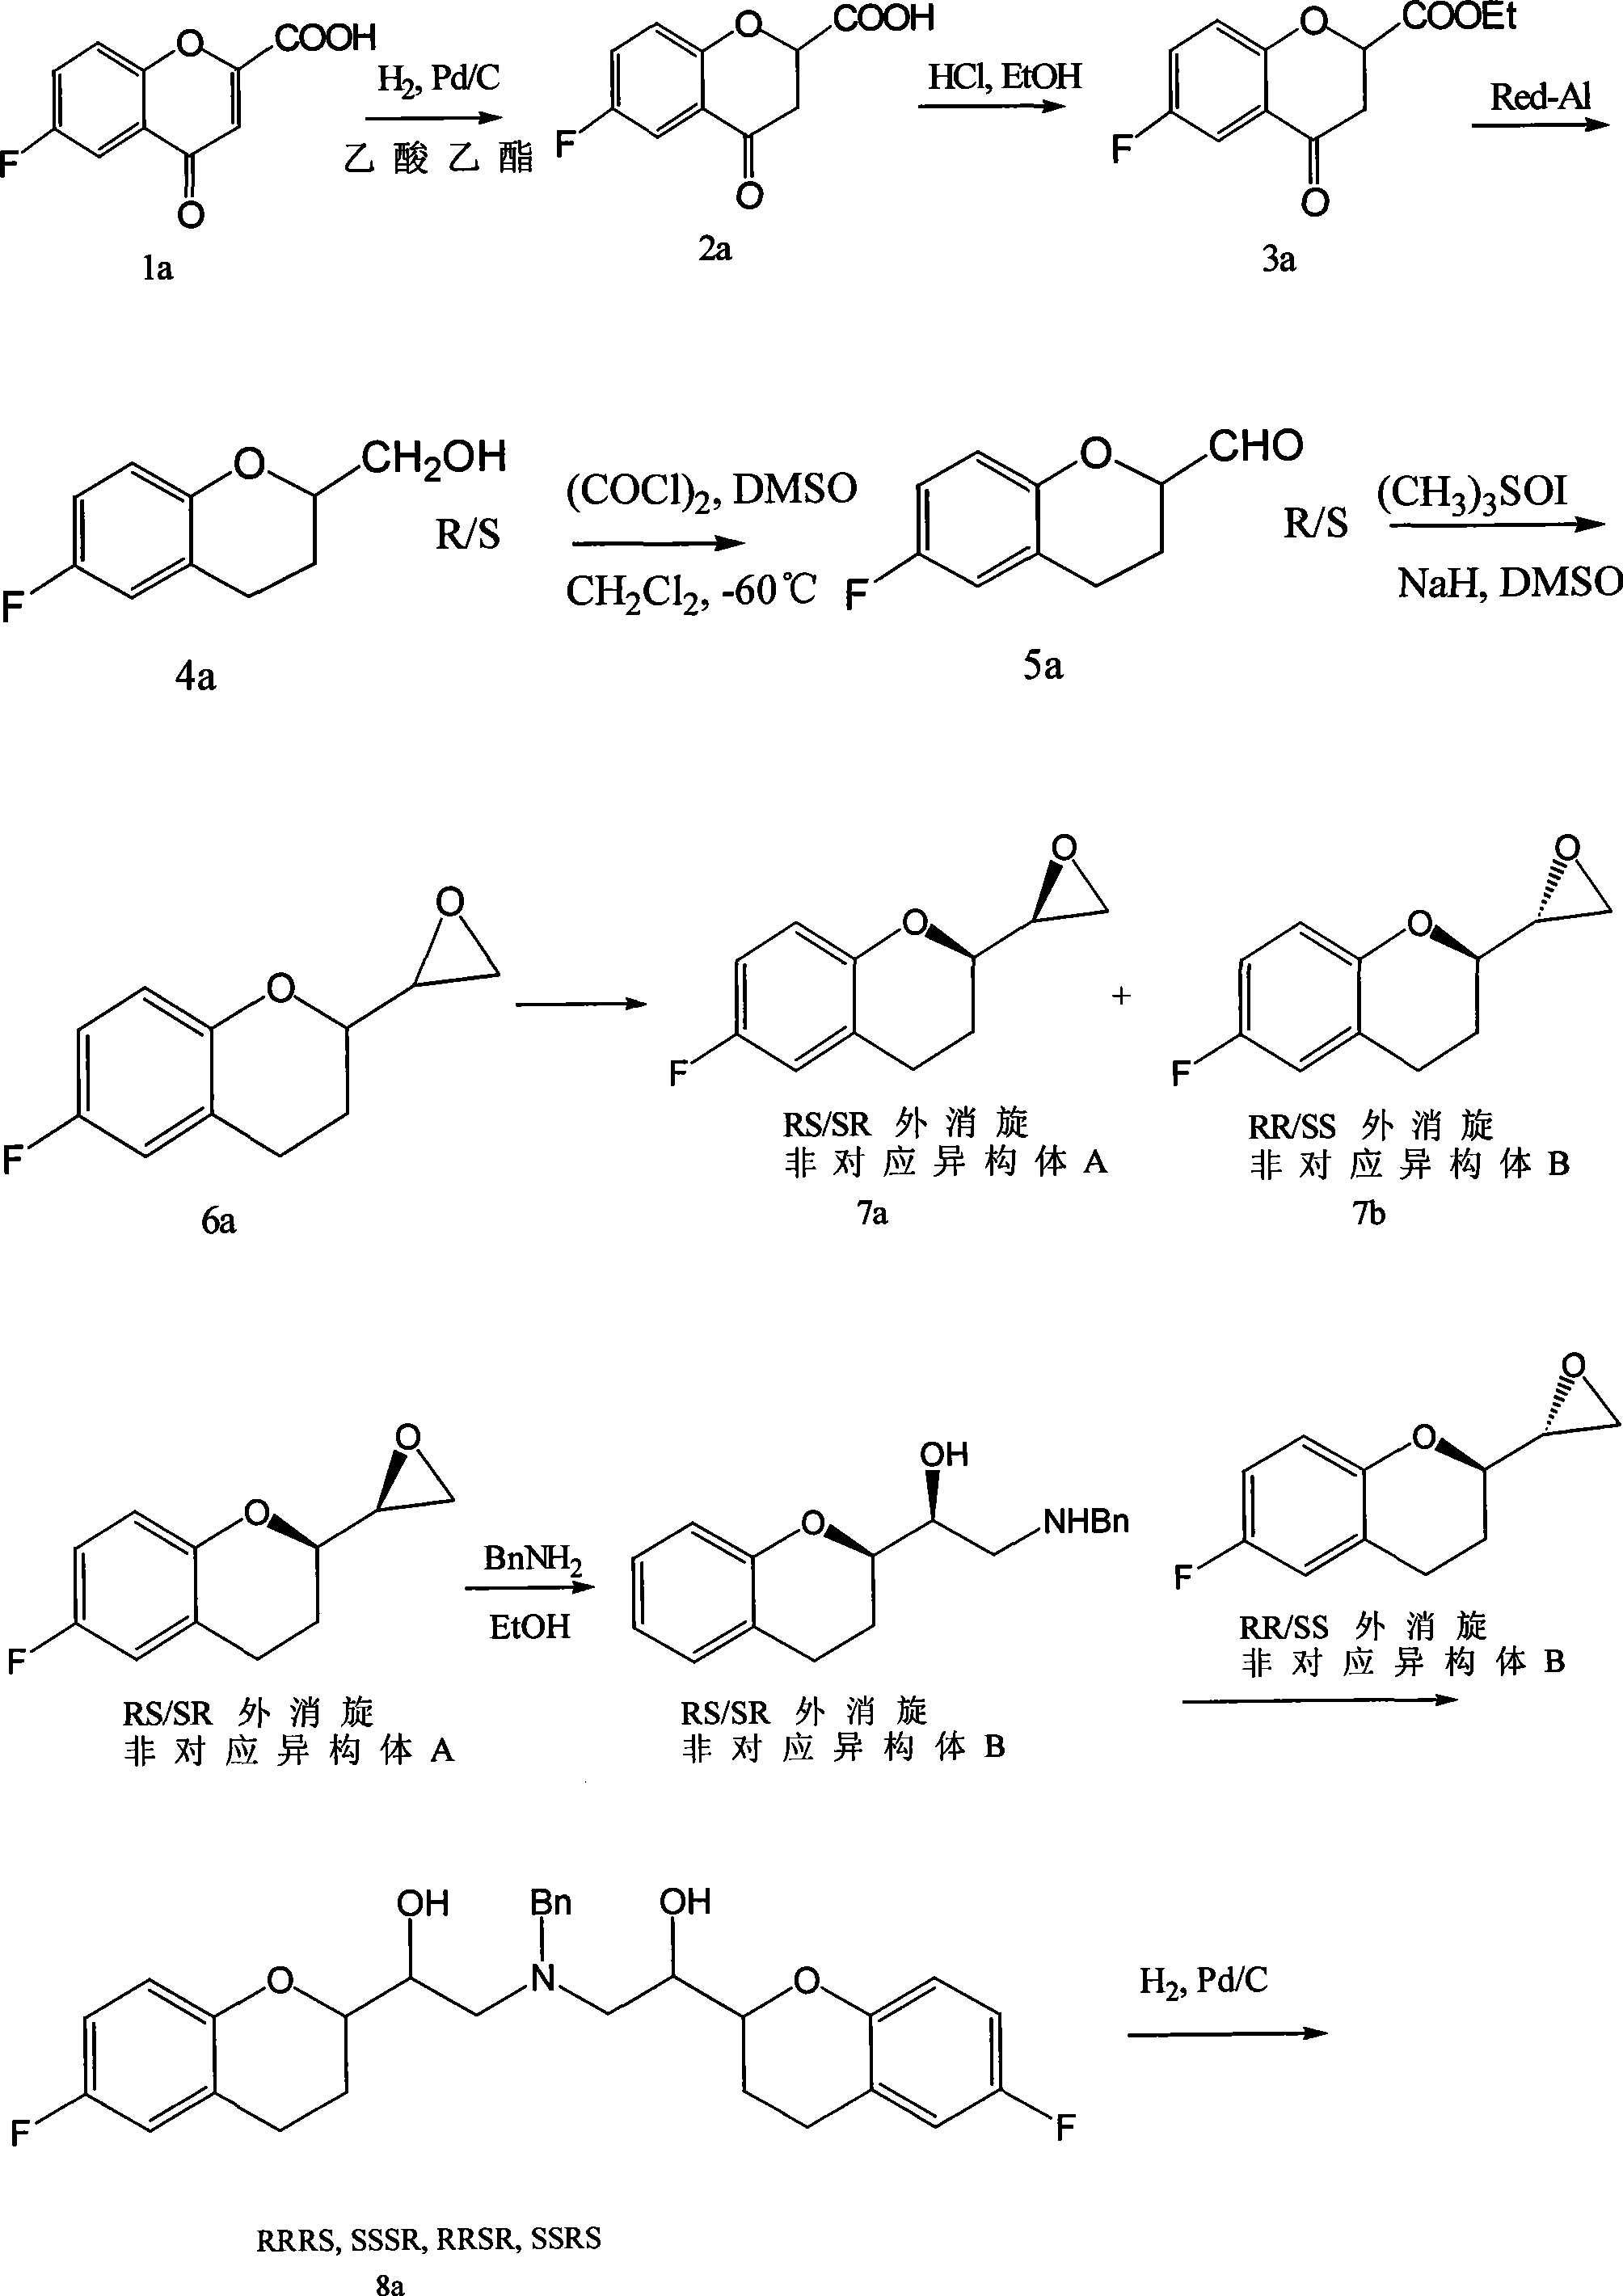 Method for preparing RRRS and SSSR type nebivolol intermediate mixture